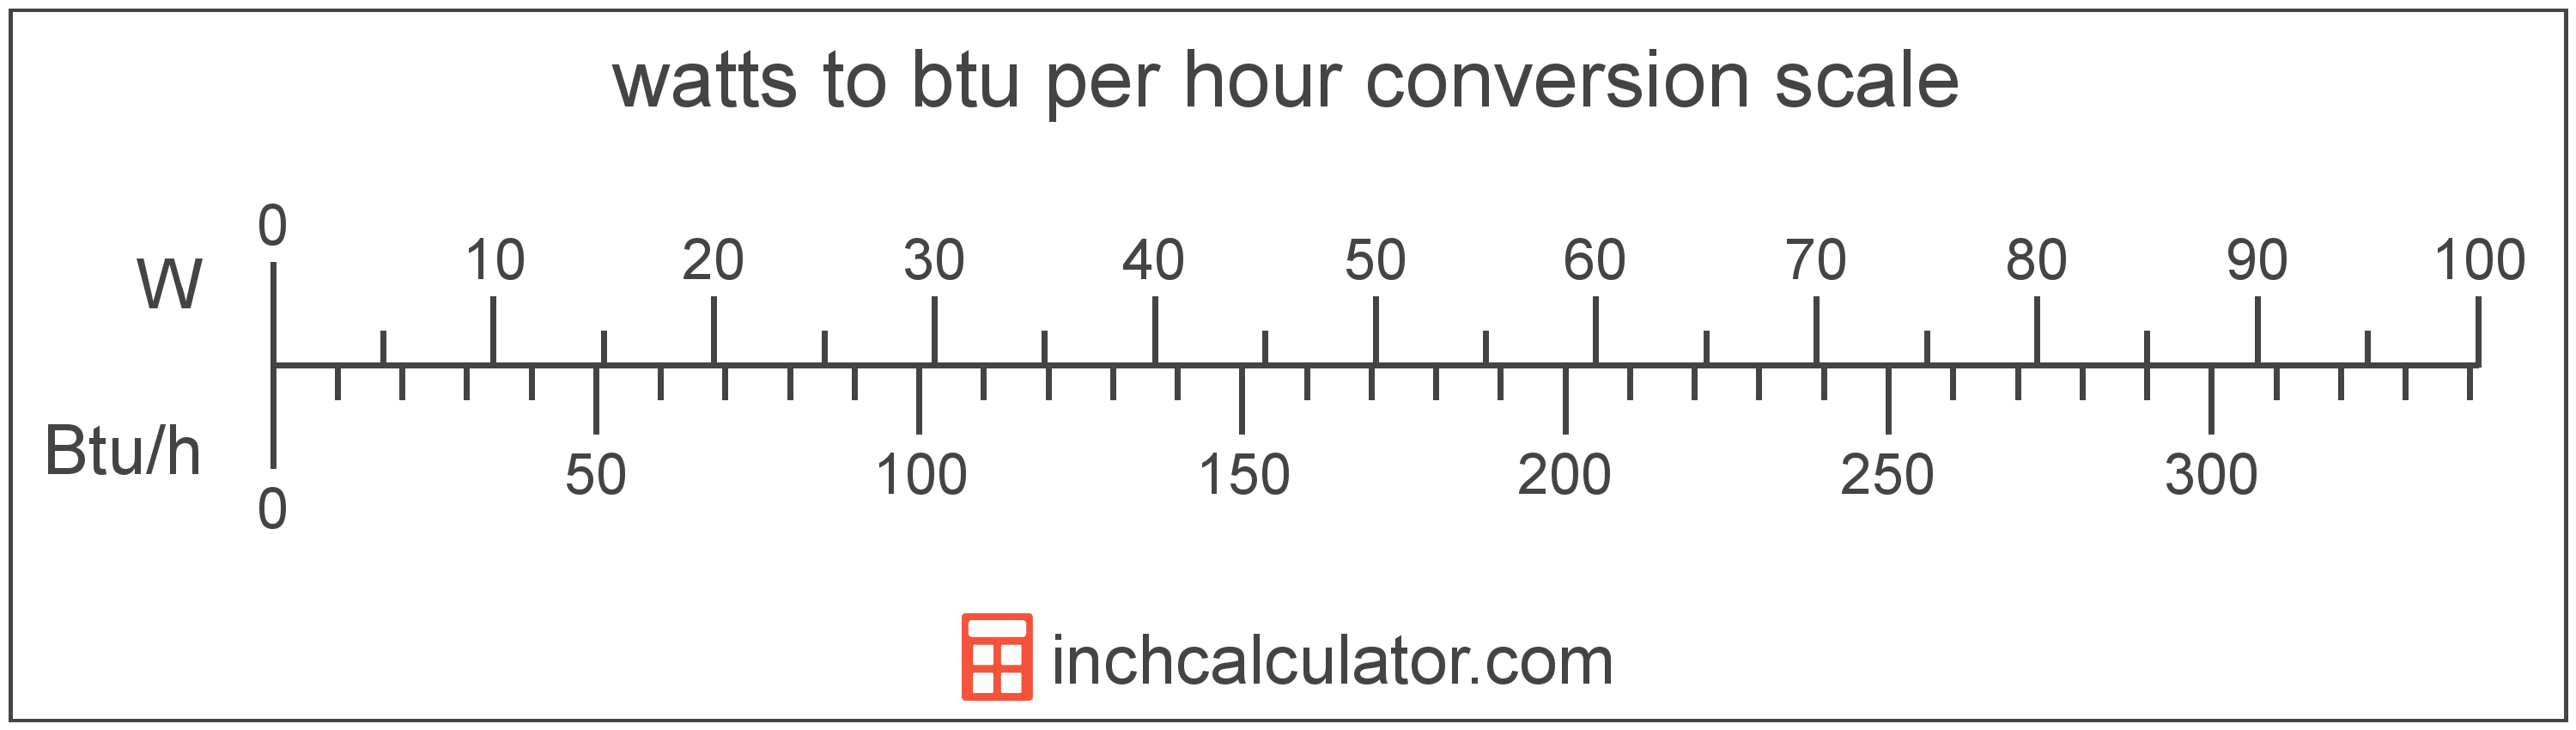 Watt Conversion Chart